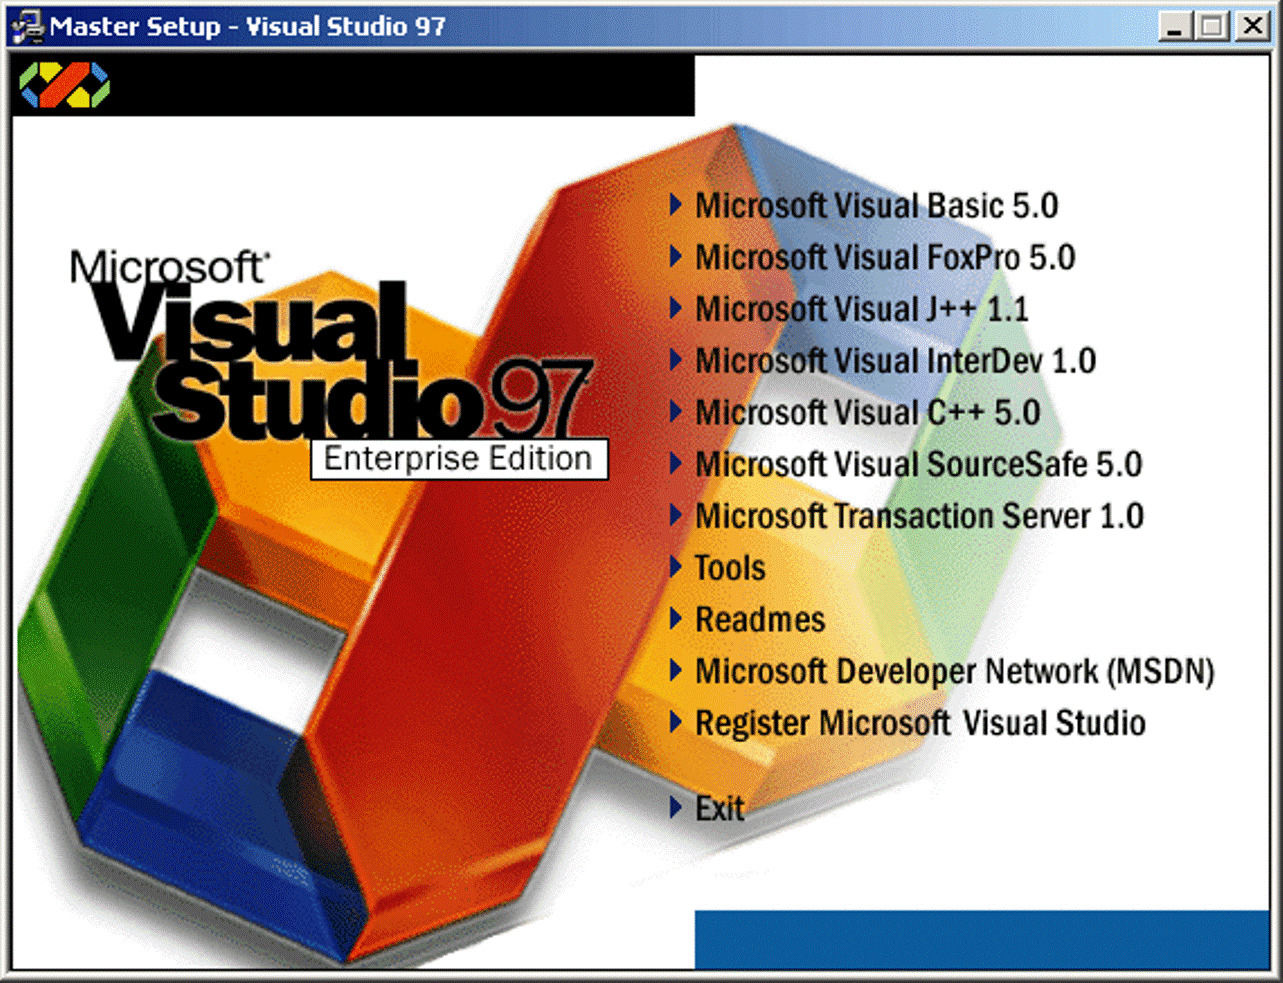 Microsoft Visual Studio 97 Full Version w/ License